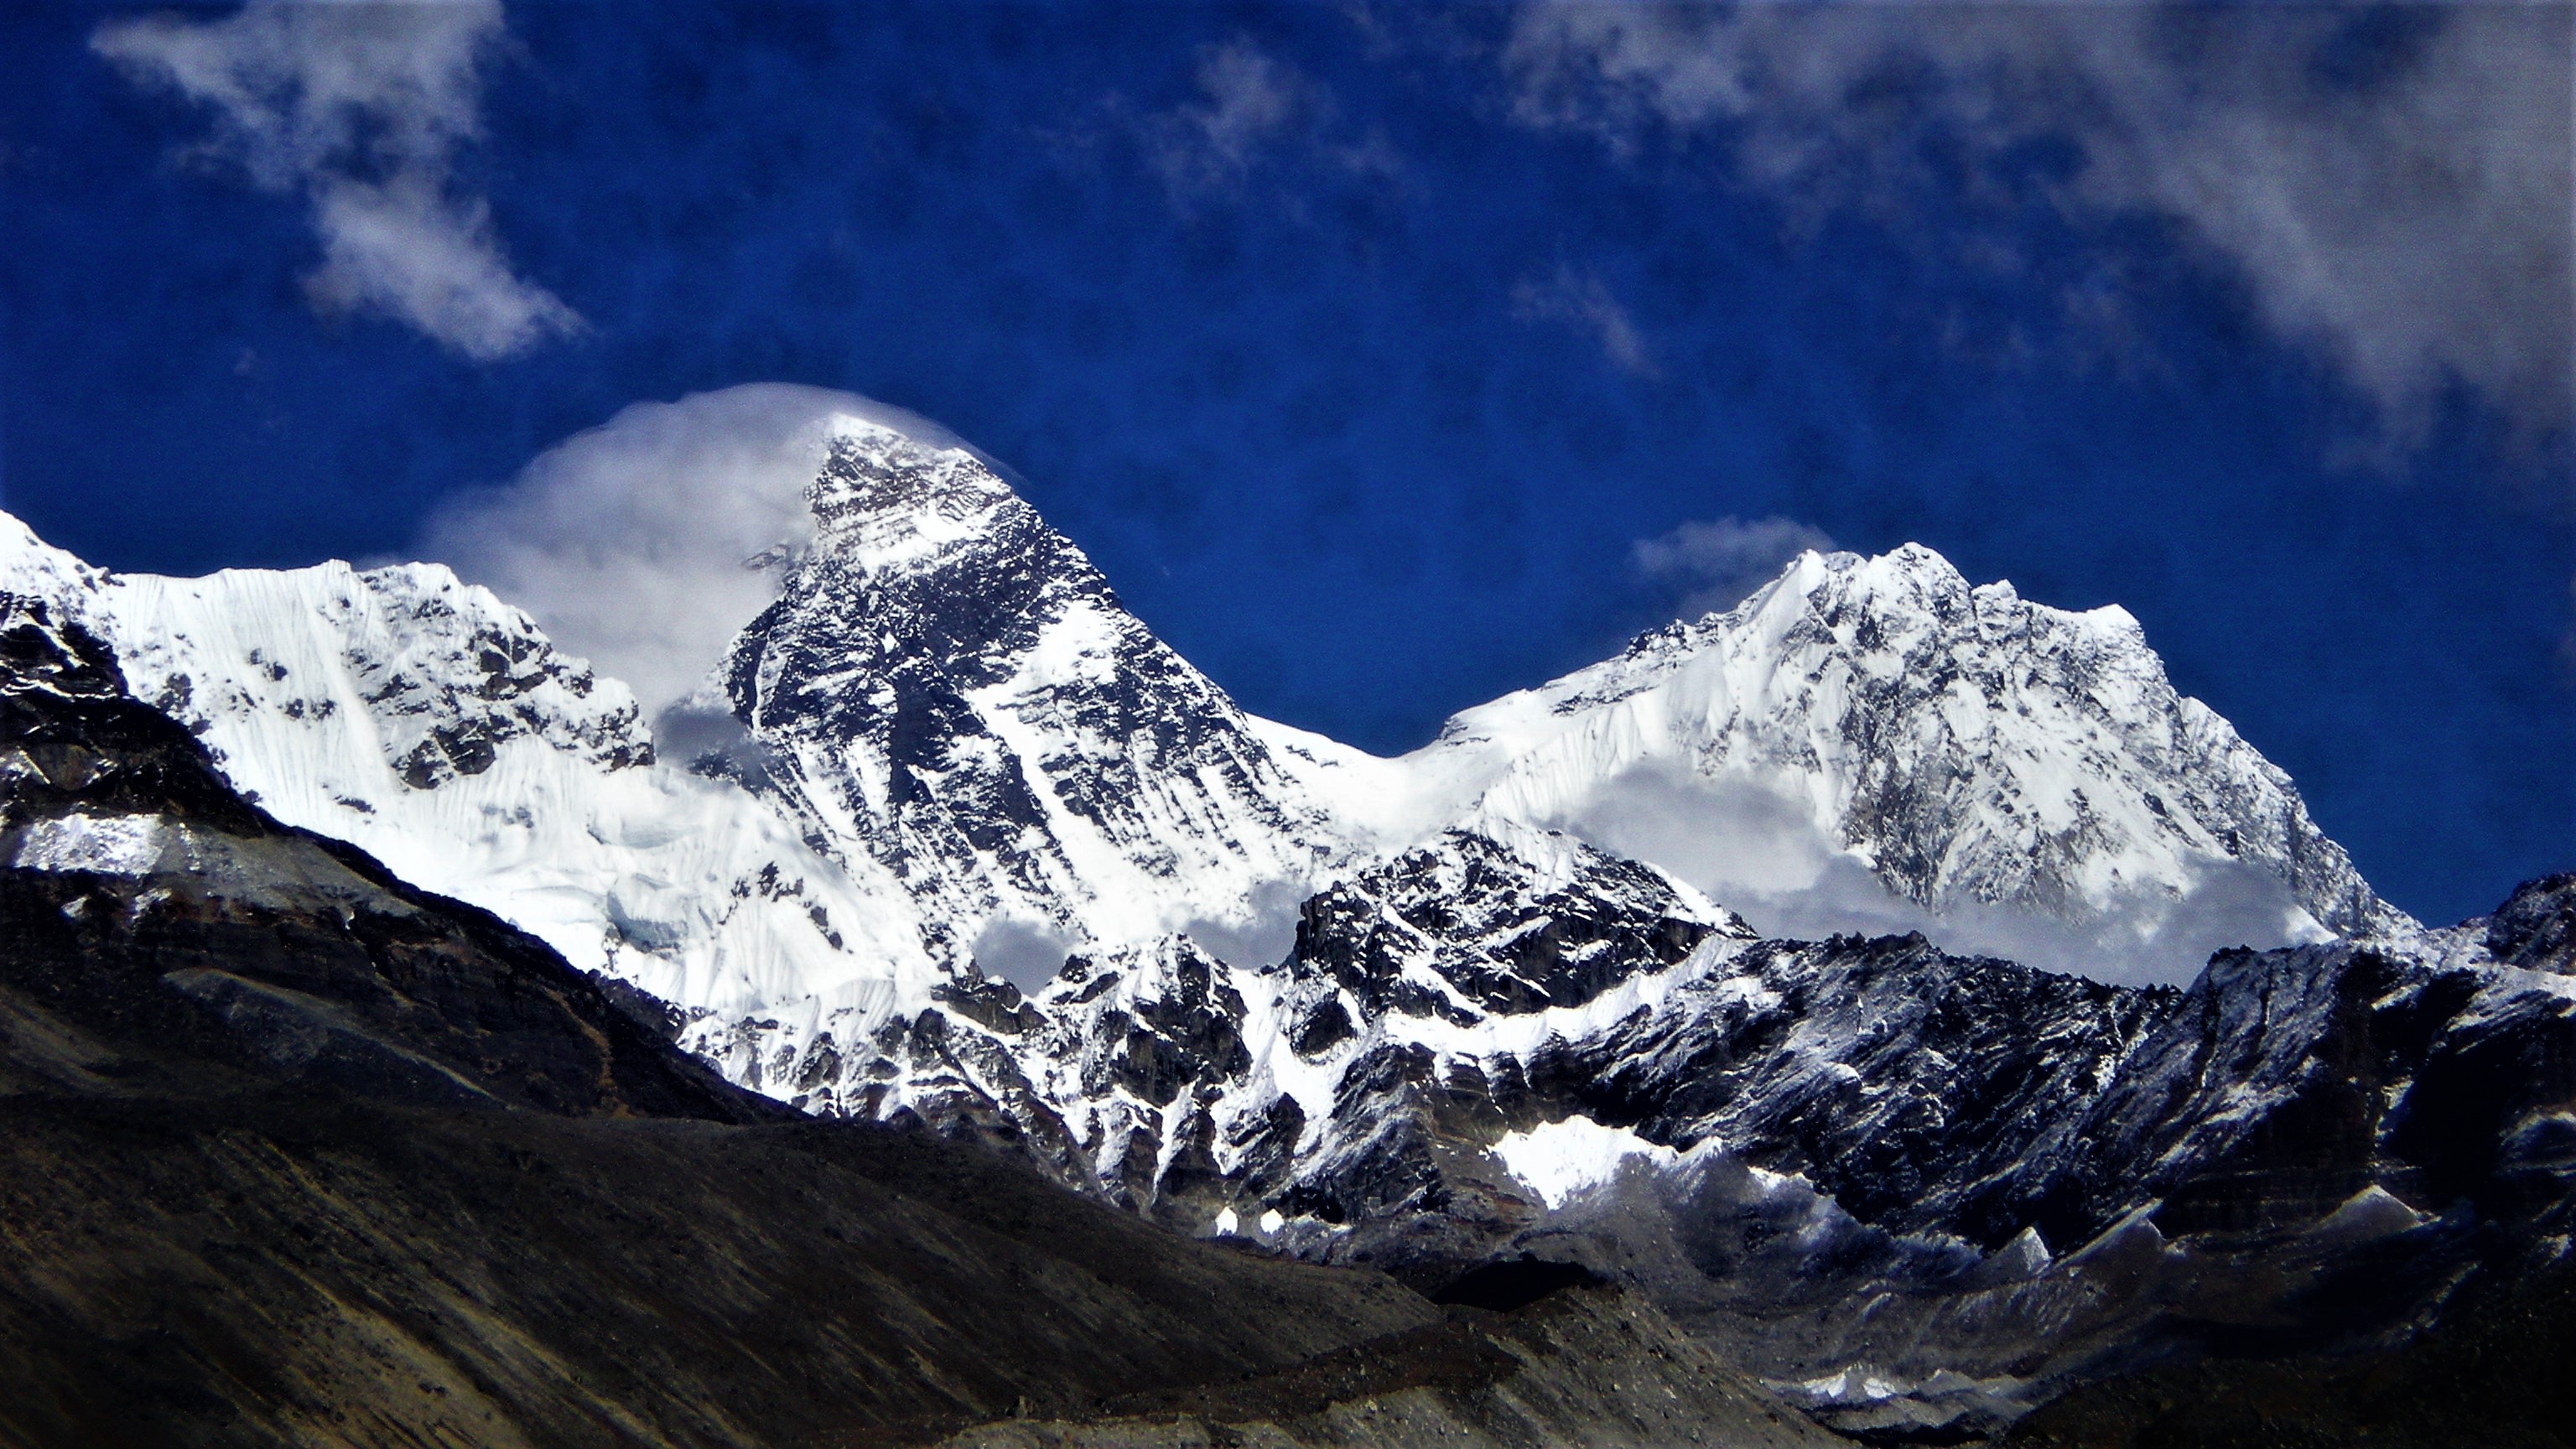 Mount Everest (8,848 m), Lhotse (8,516 m) 